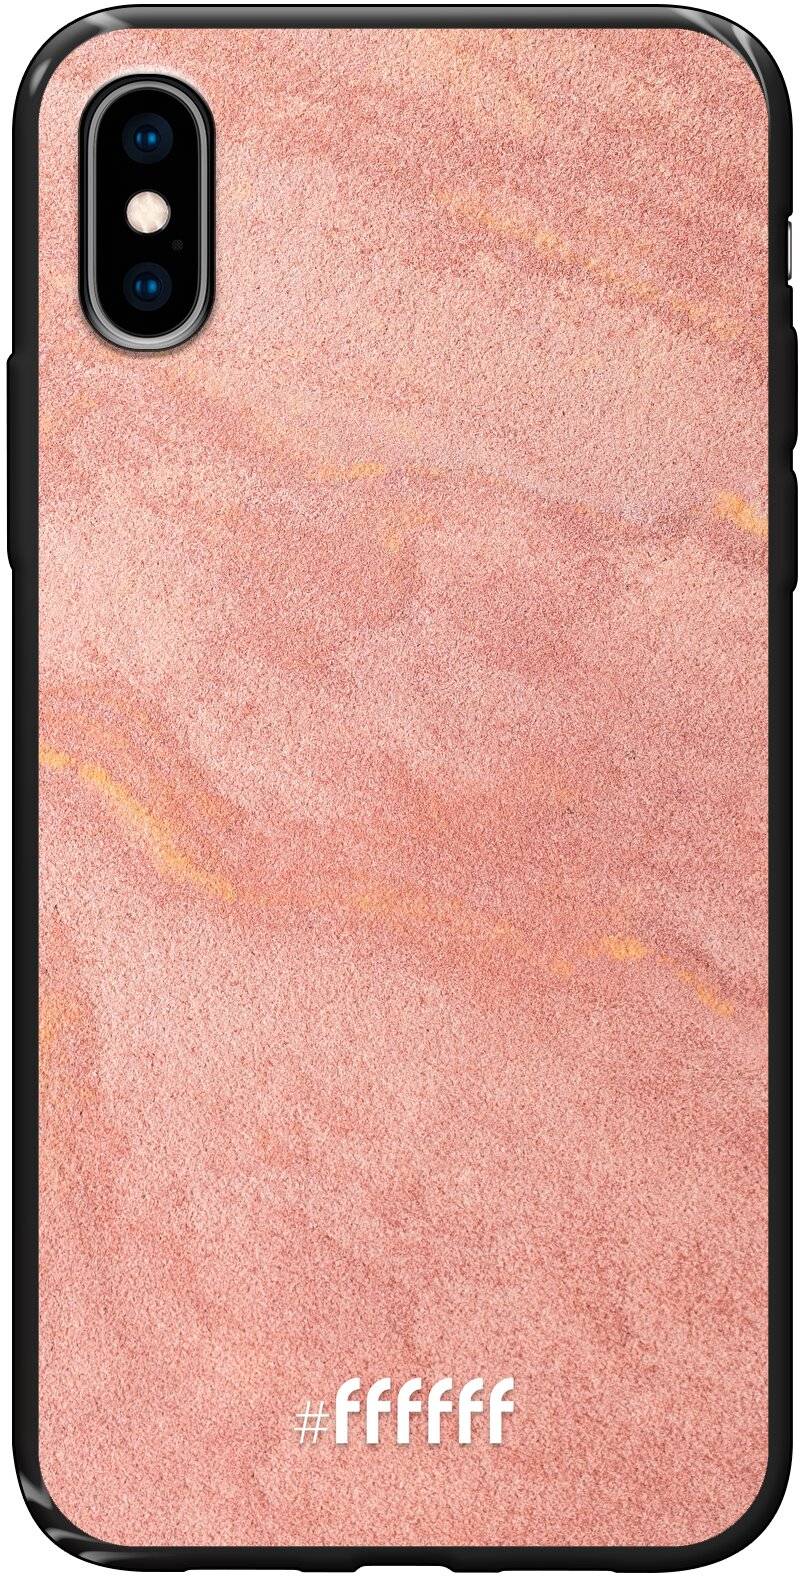 Sandy Pink iPhone X